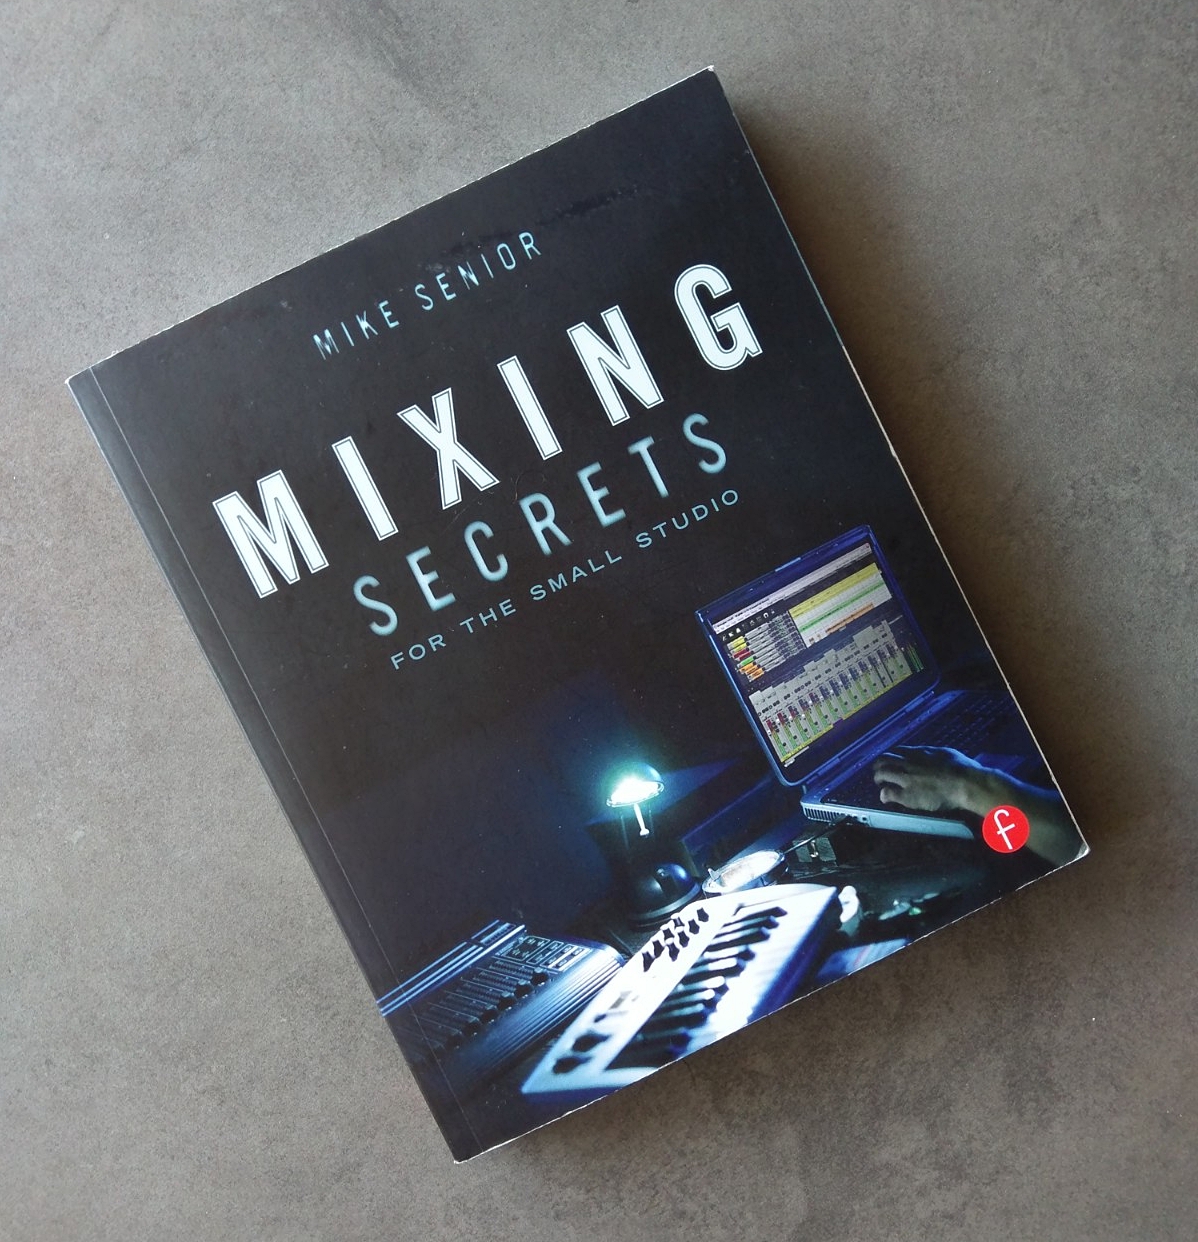 kulstof Vandt Lære Mixing secrets for the small studio ' - Book Review — DJ Leandro - Producer  & DJ